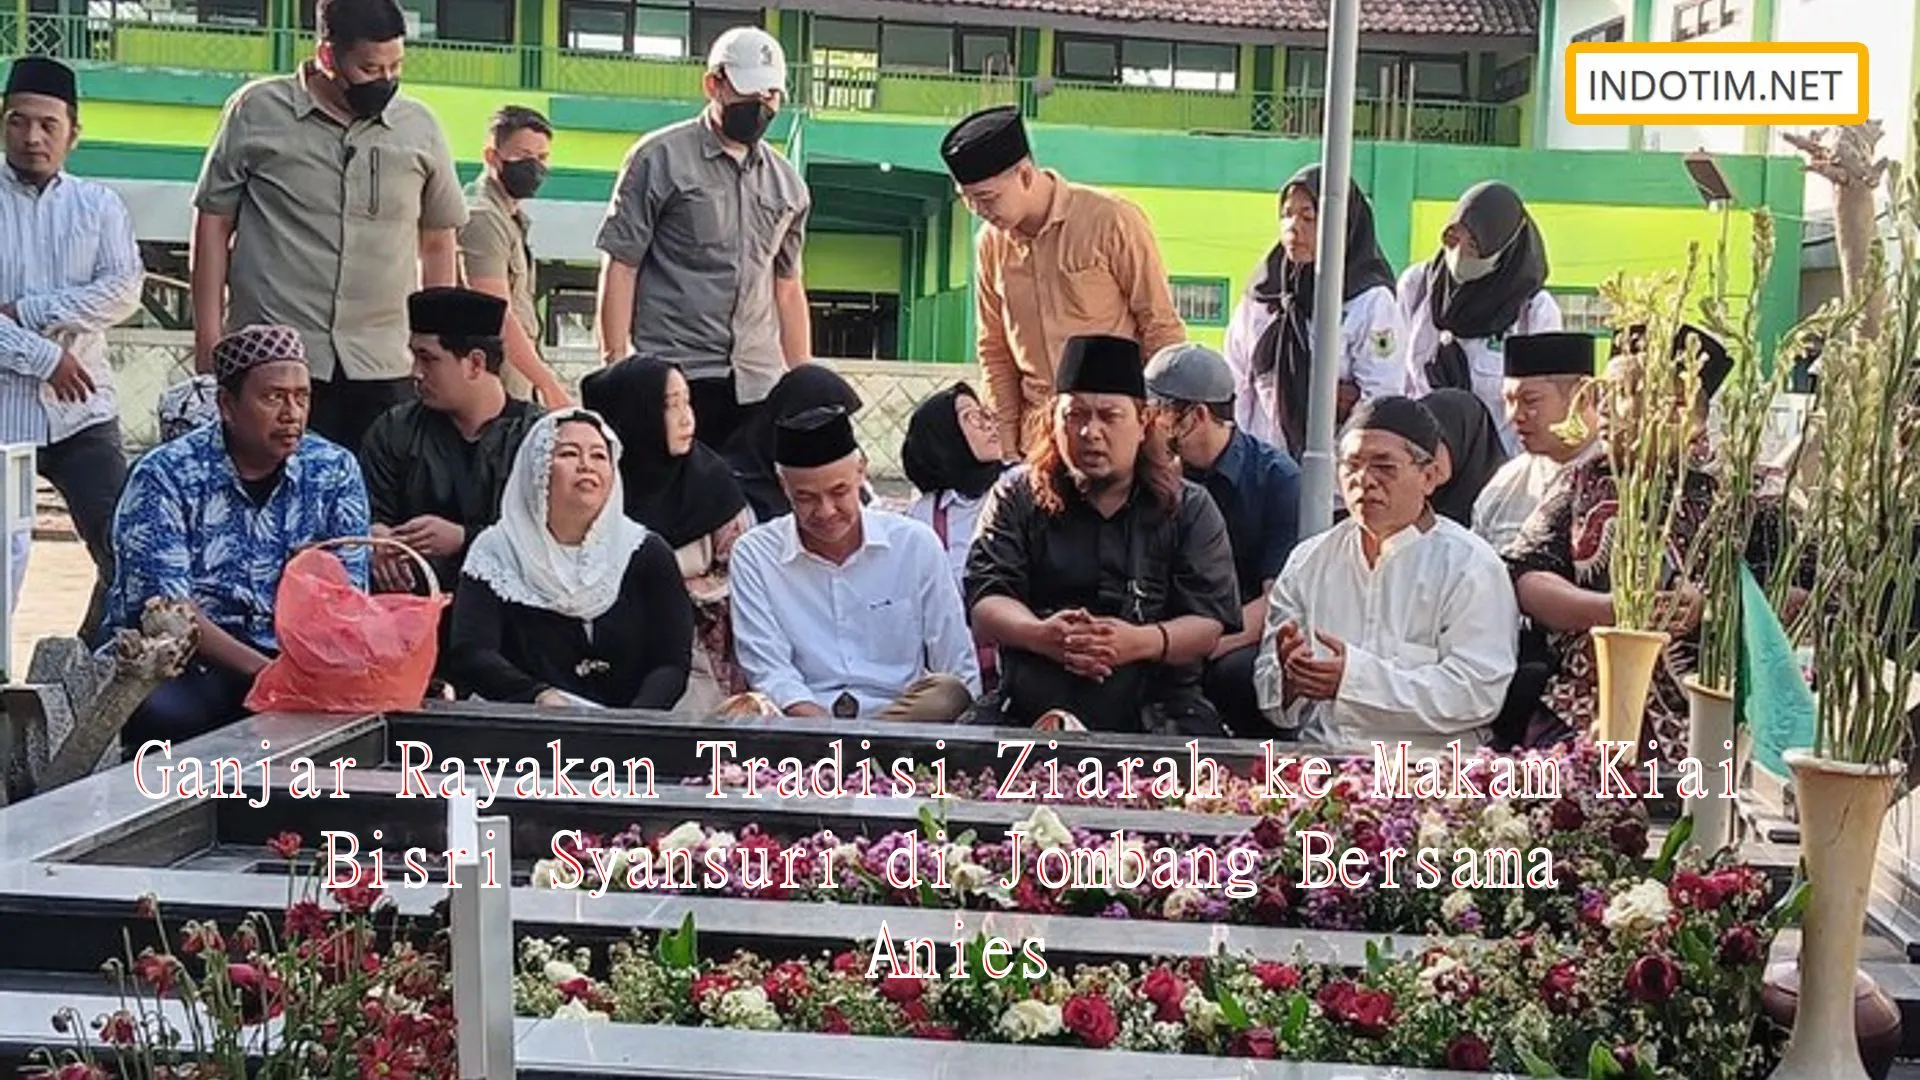 Ganjar Rayakan Tradisi Ziarah ke Makam Kiai Bisri Syansuri di Jombang Bersama Anies